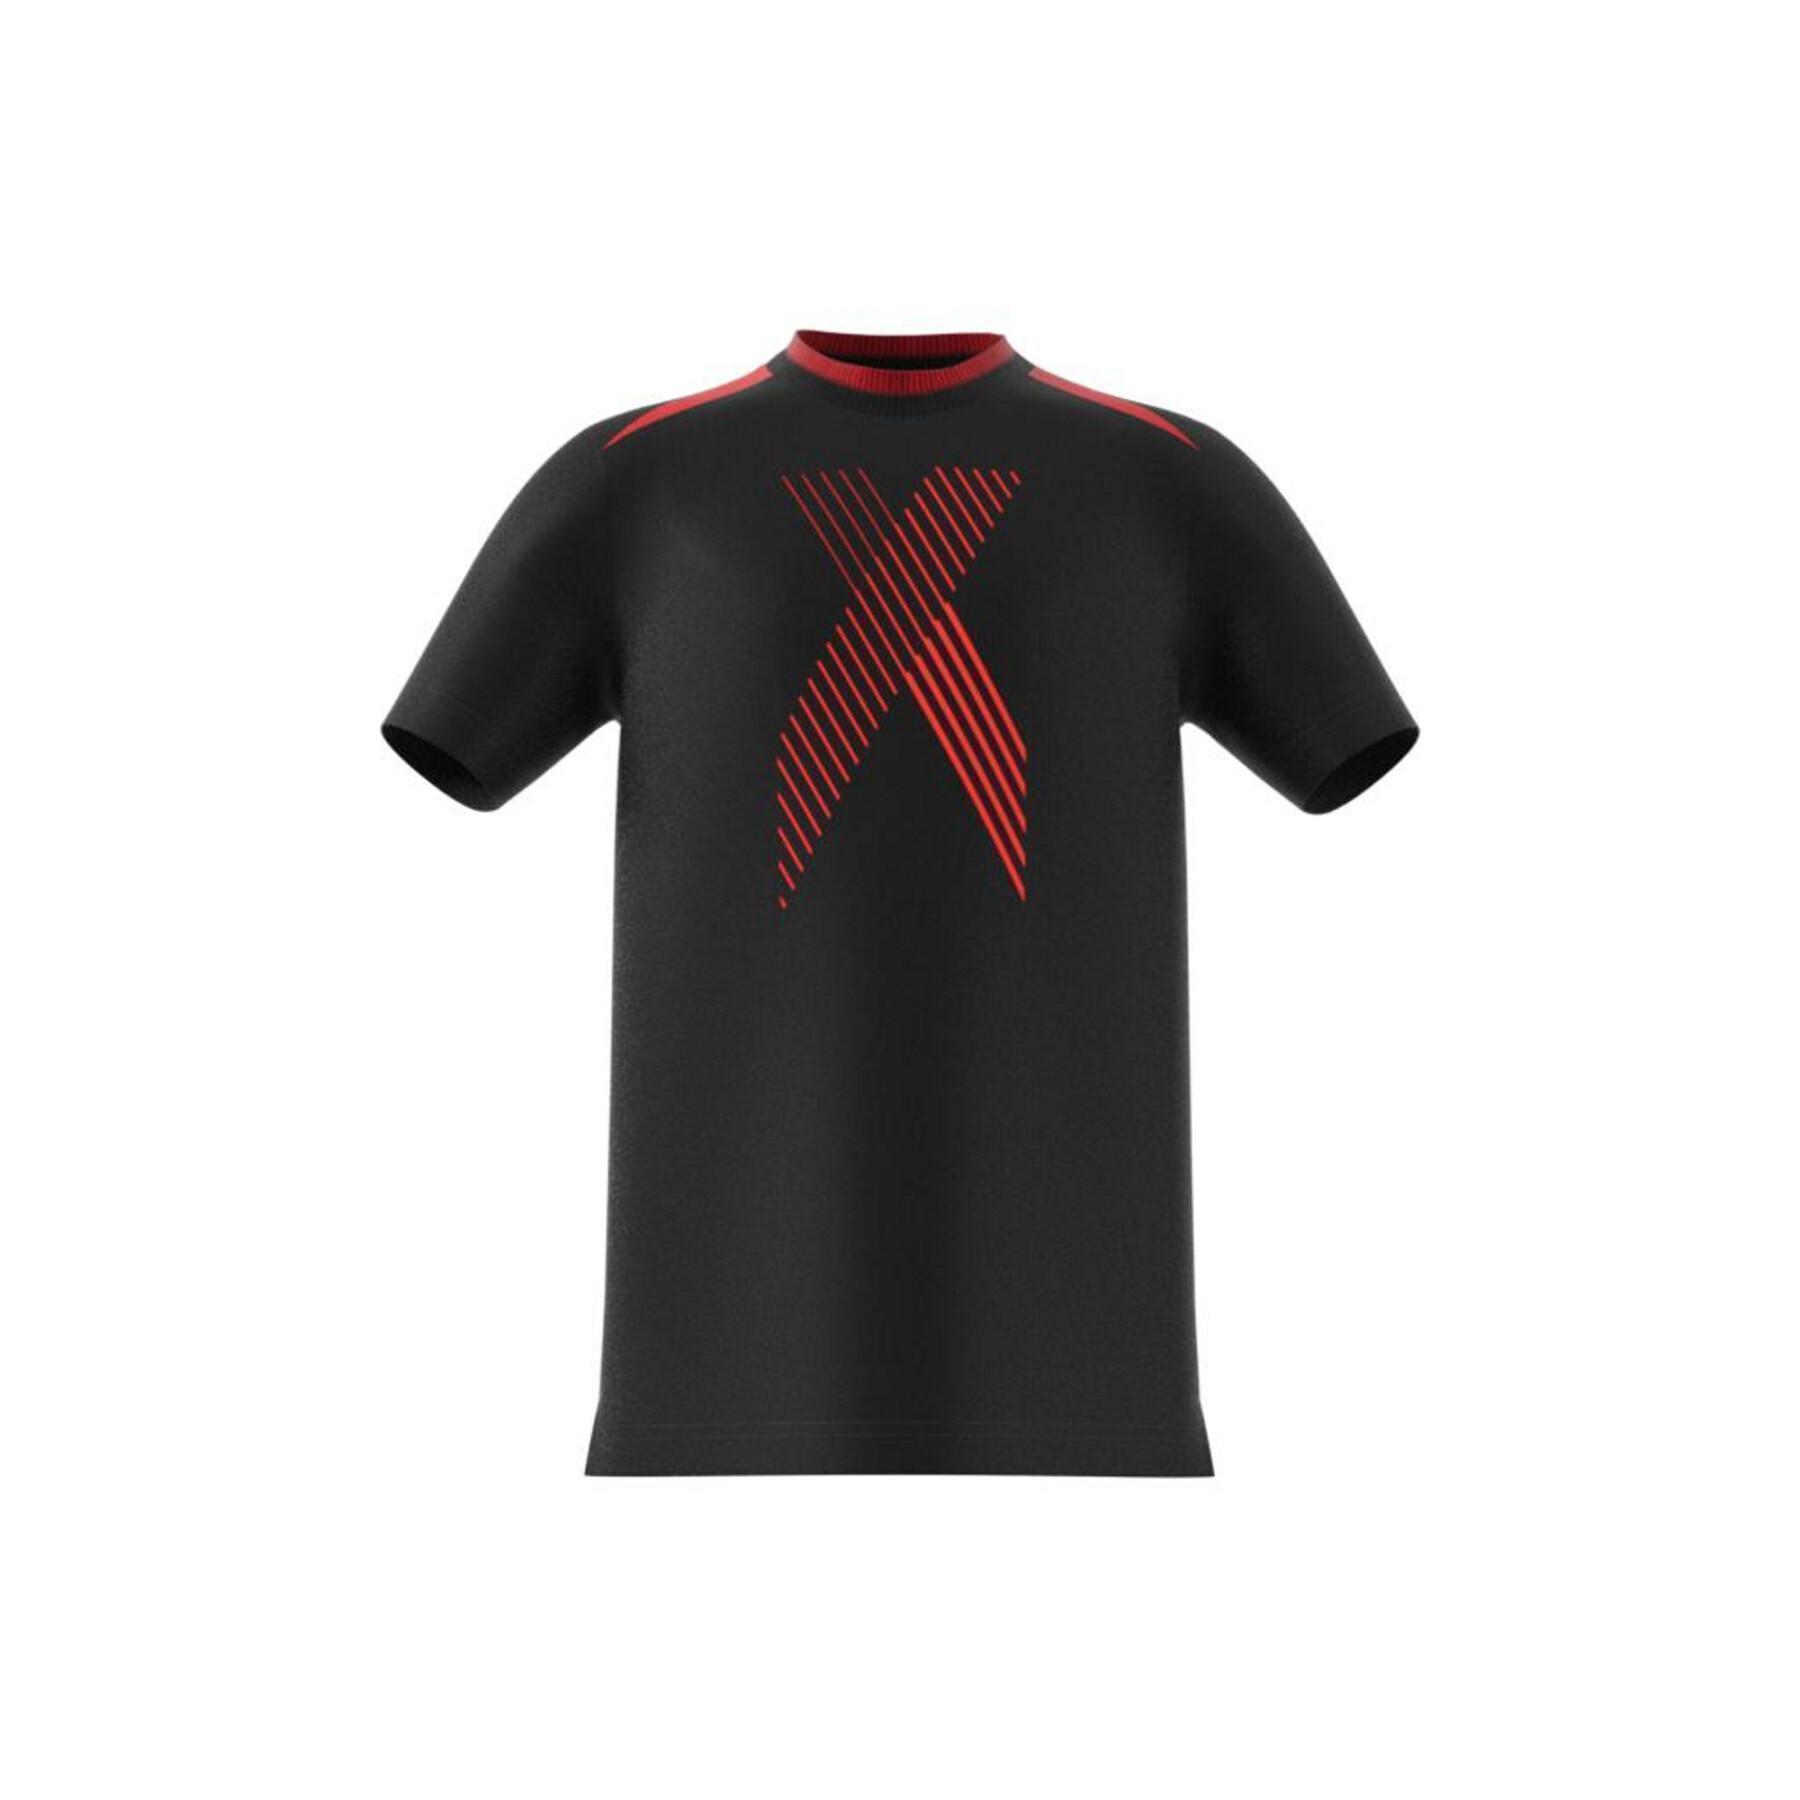 Koszulka dziecięca adidas AEROREADY X Football-Inspired